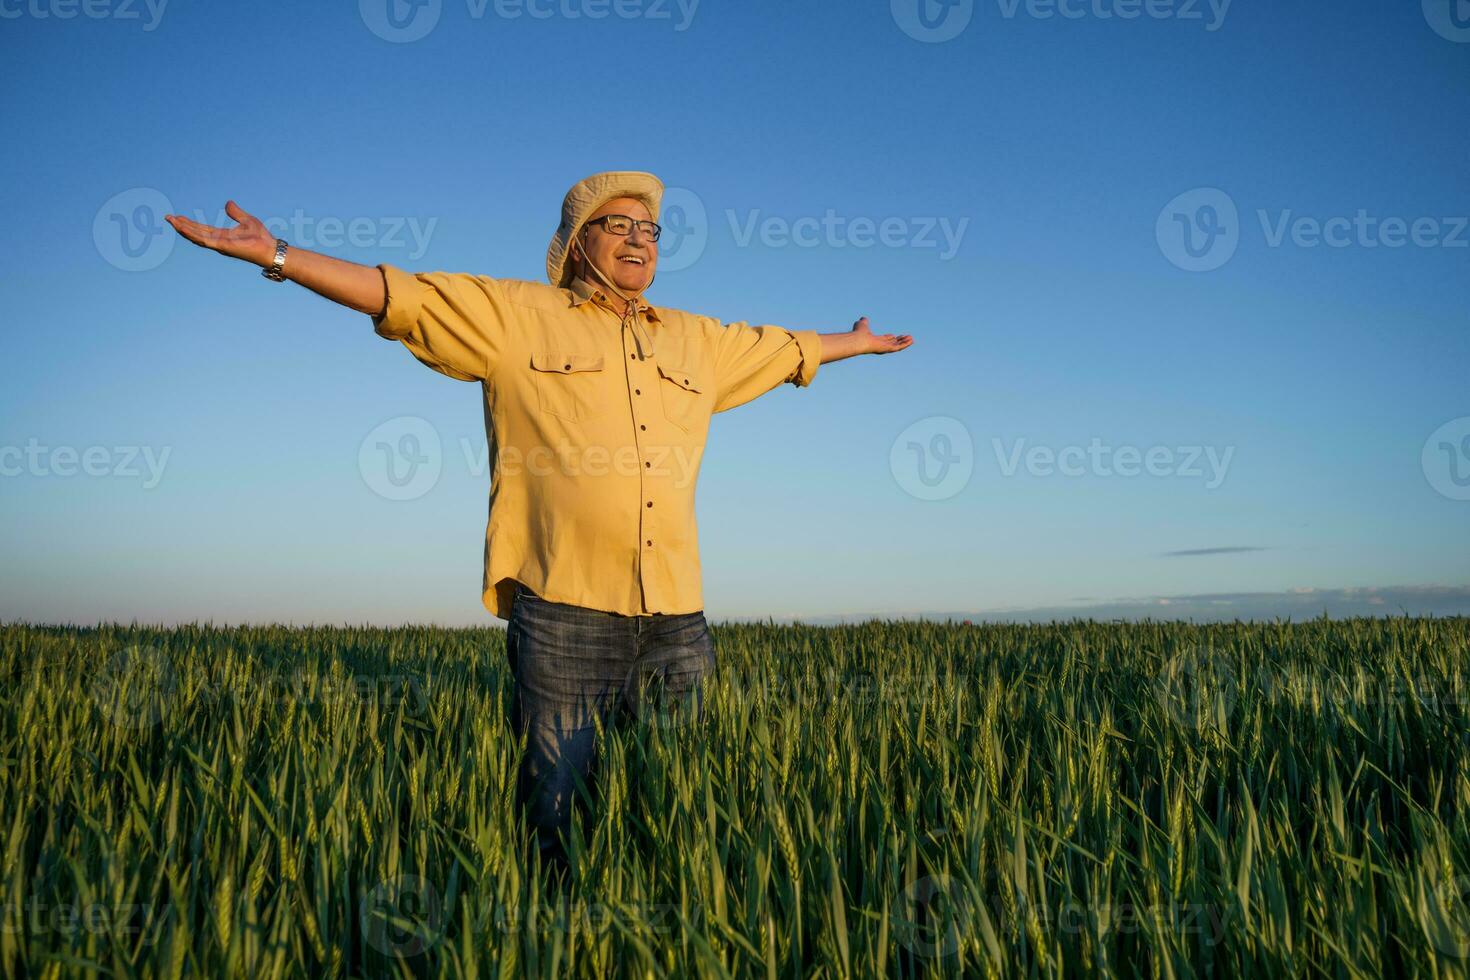 Farmer standing in a wheat field photo